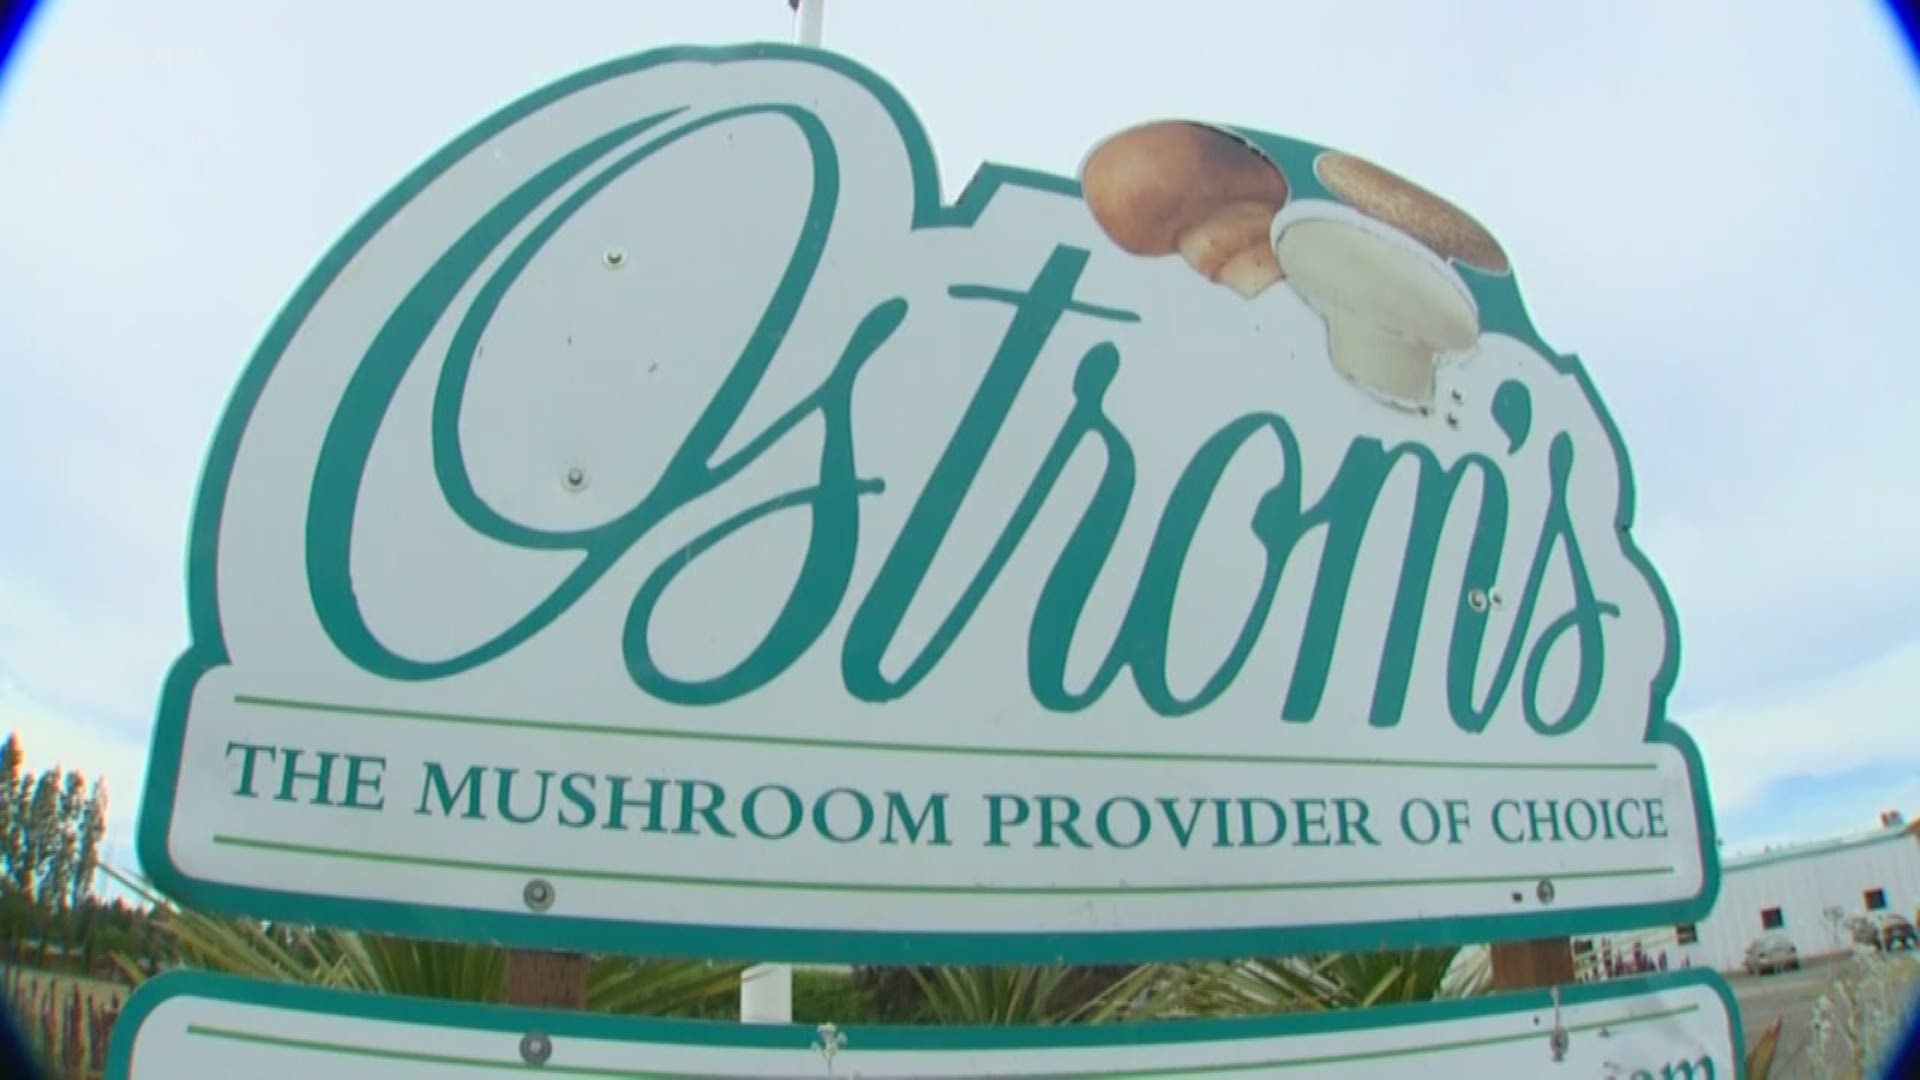 Longtime mushroom farm Ostrom's is moving from Lacey to Sunnyside, Washington. KING 5's Jenna Hanchard reports.